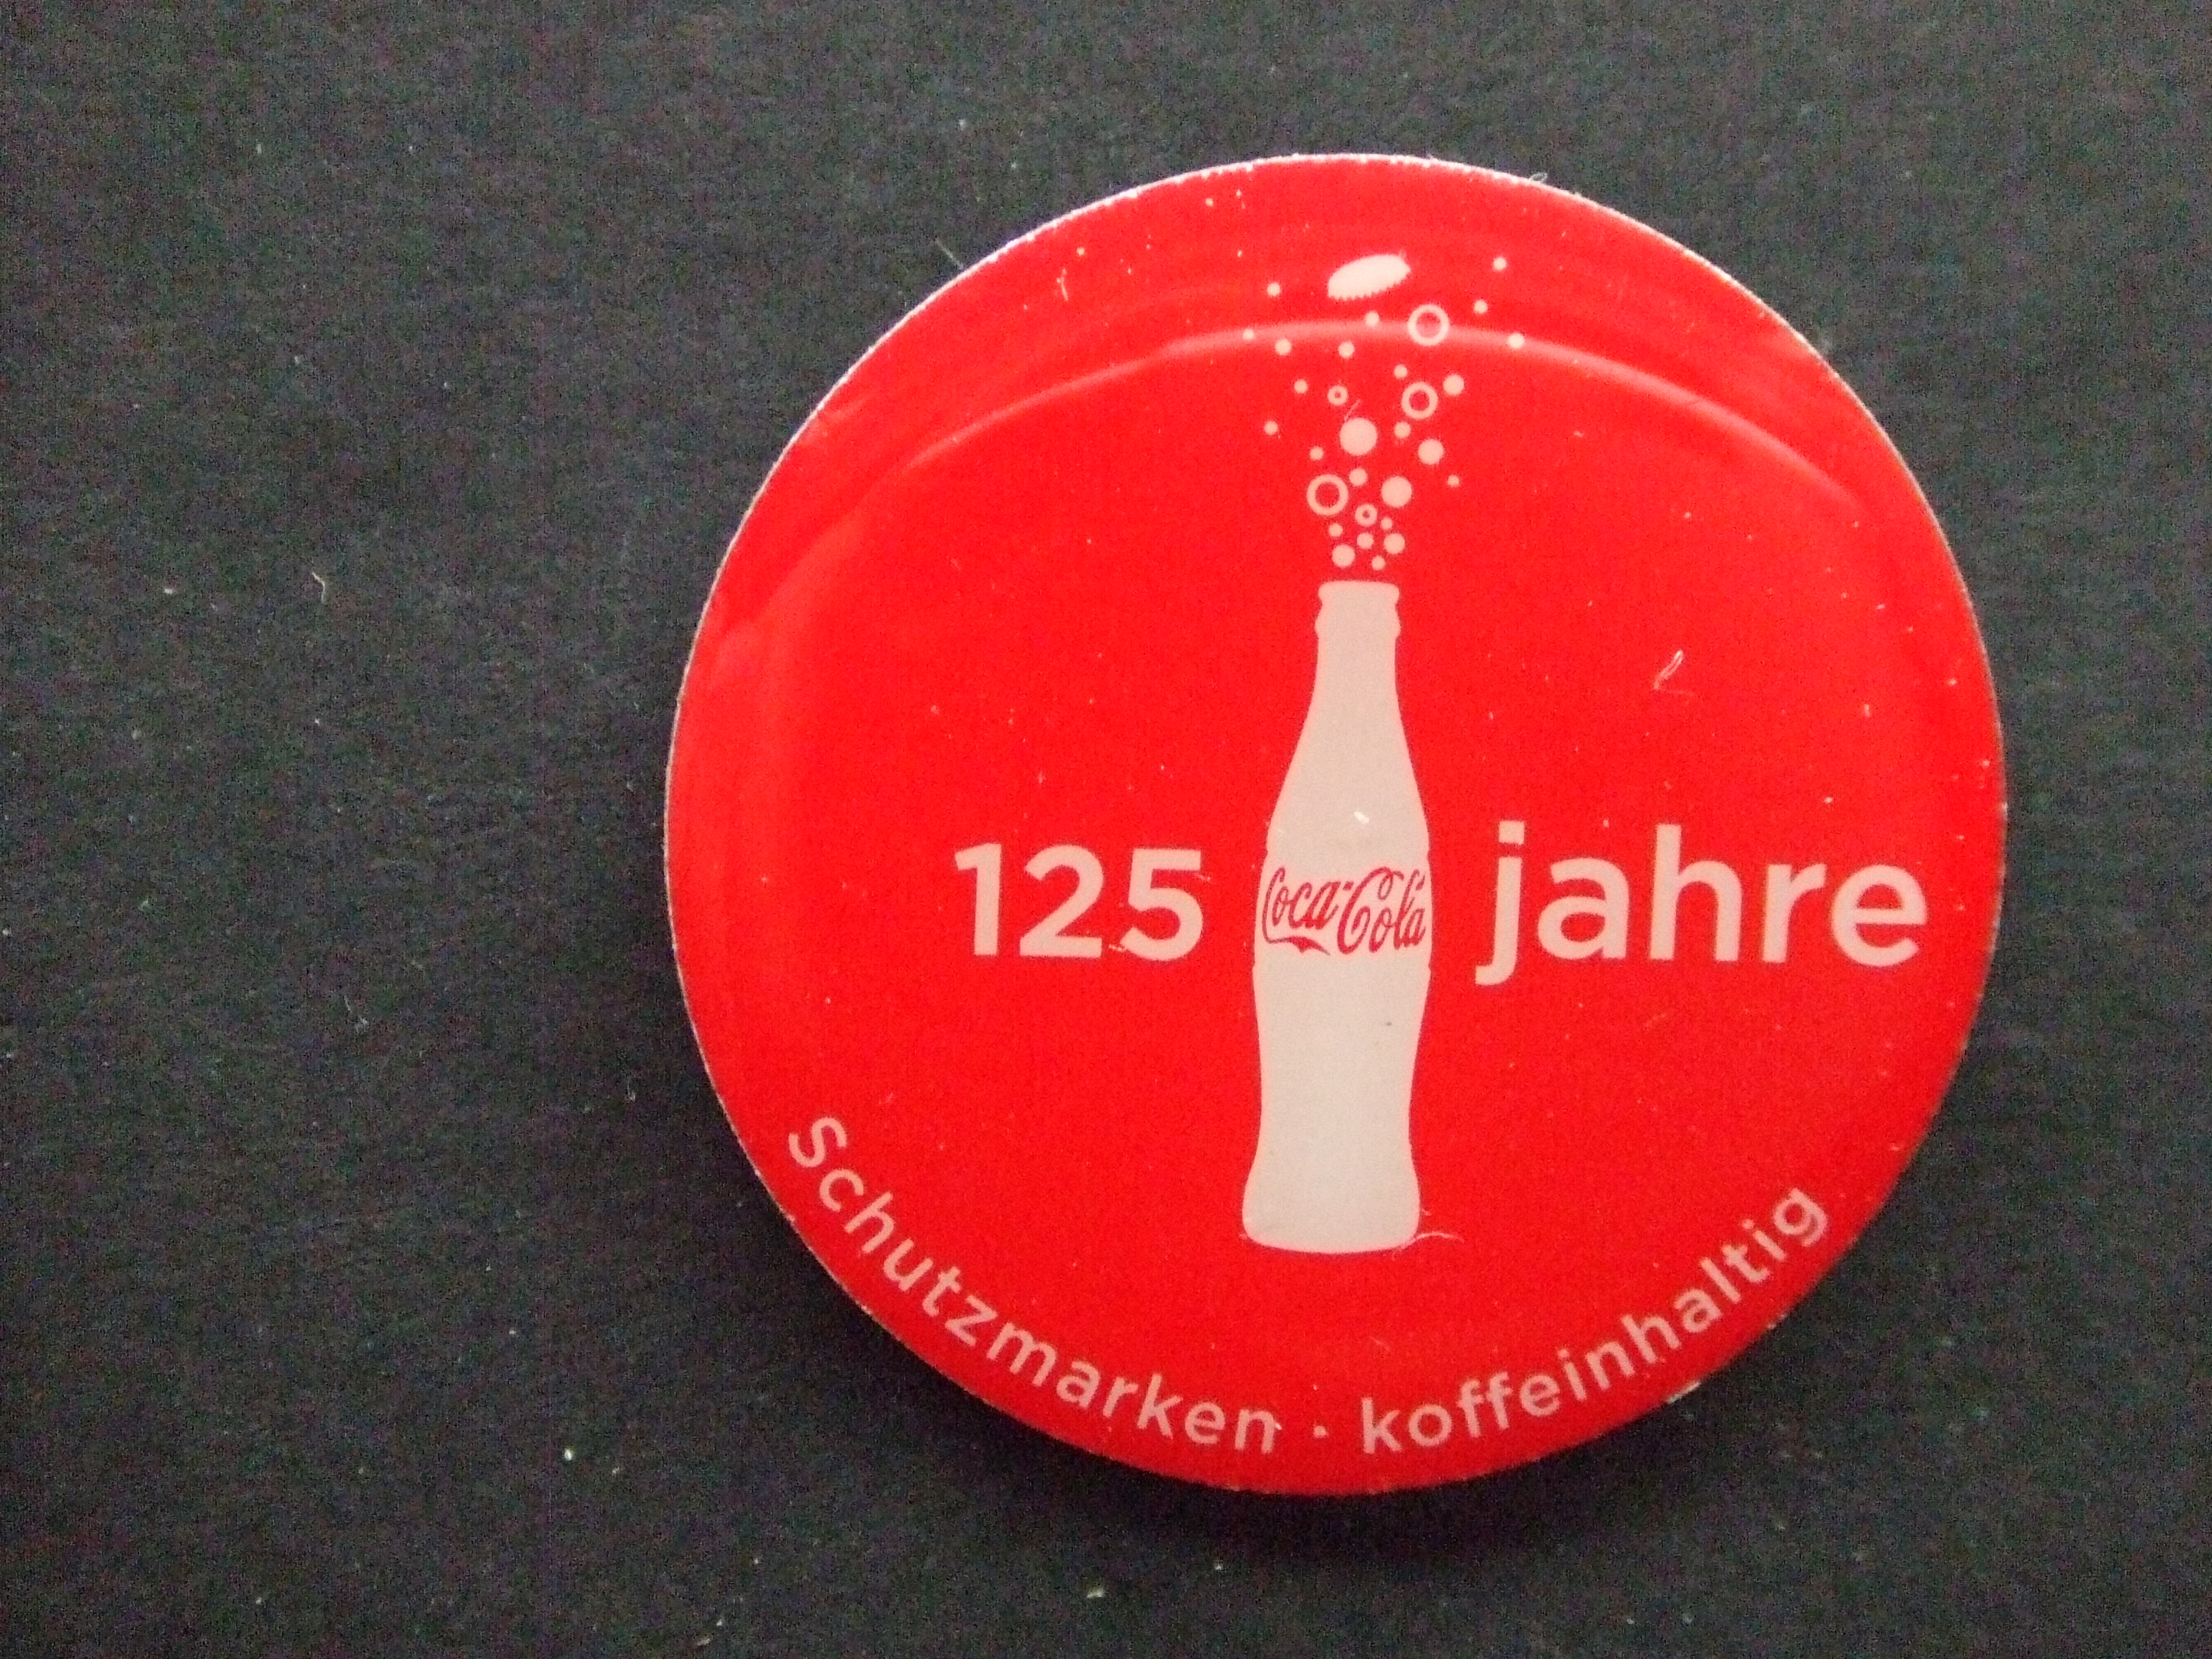 Coca Cola 125 jarig jubileum in Duitsland